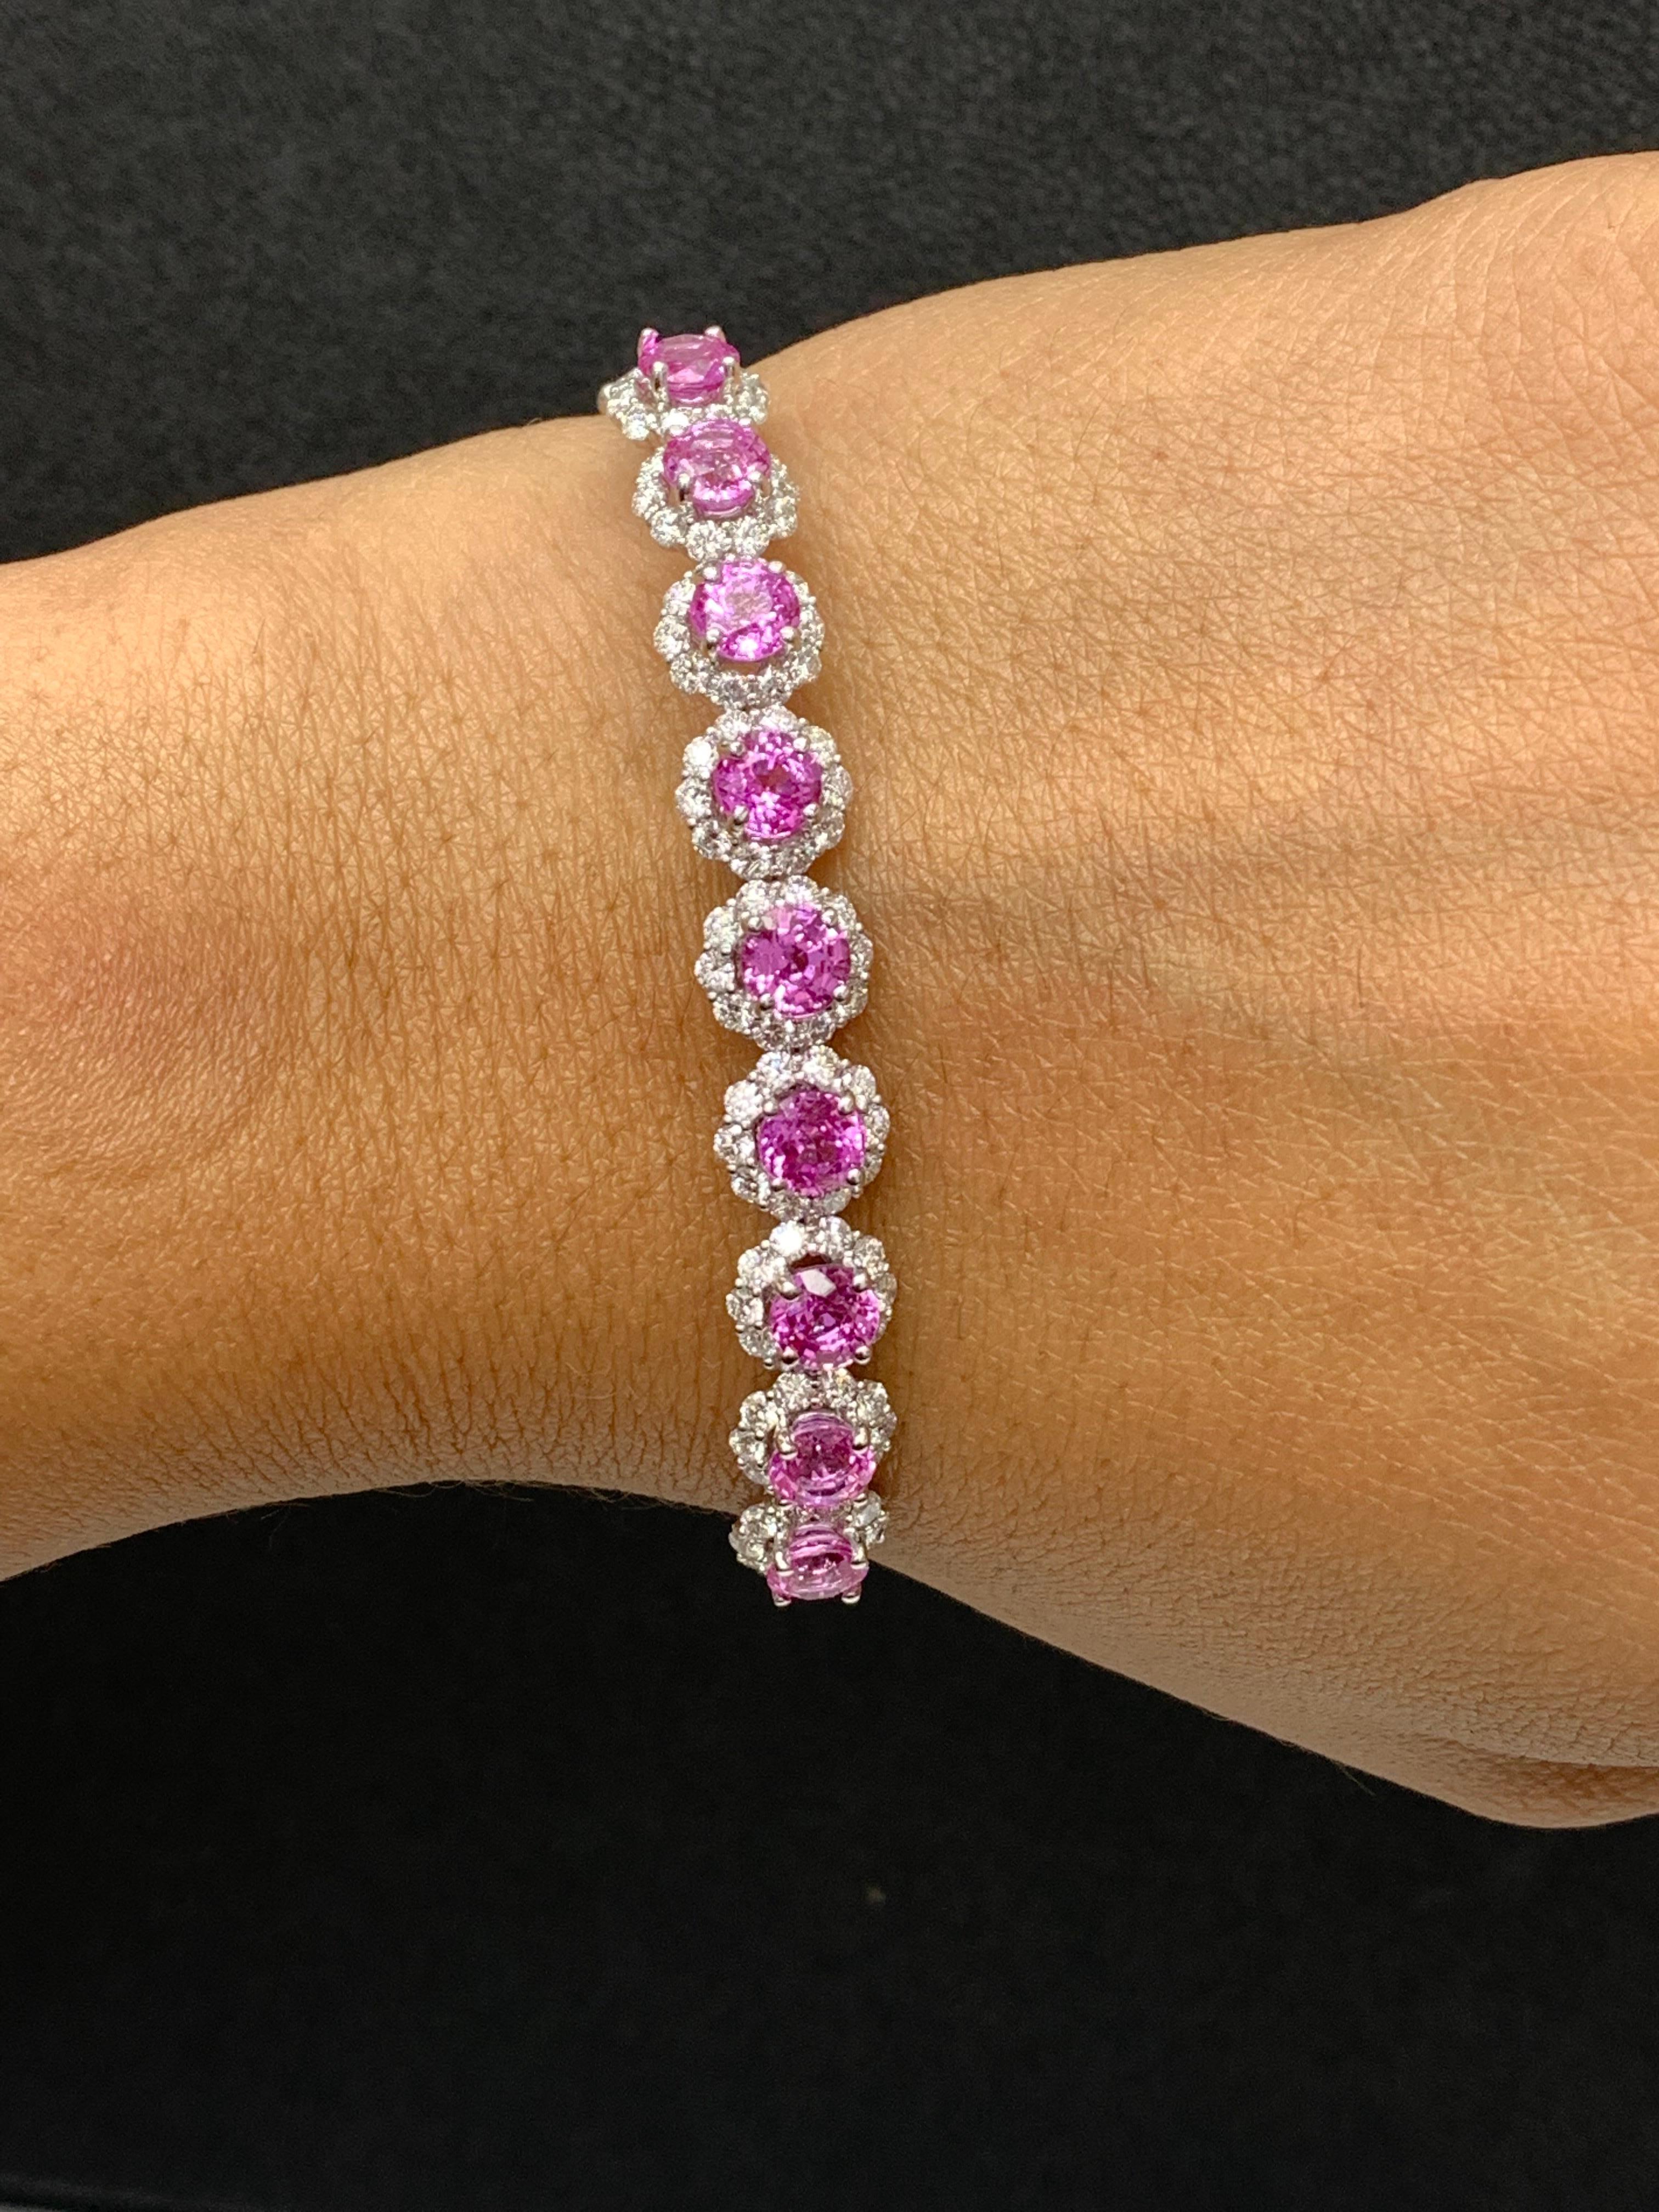 Women's 5.82 Carat Brilliant Cut Pink Sapphire Diamond Bangle Bracelet in 18k White Gold For Sale